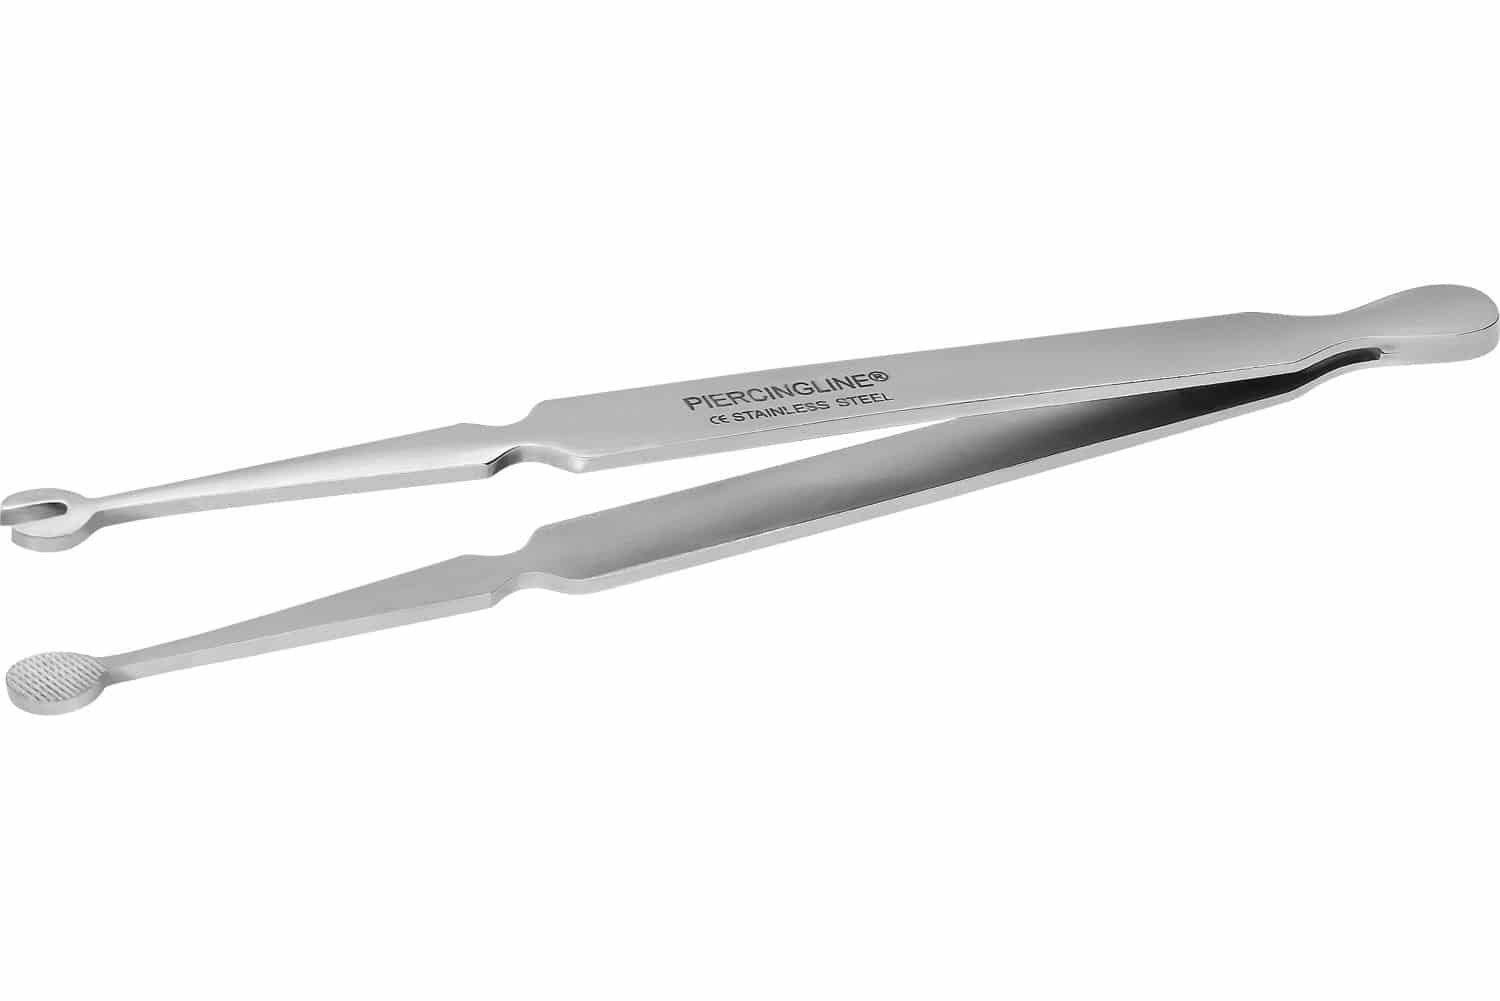 Stainless steel labret holding tweezers